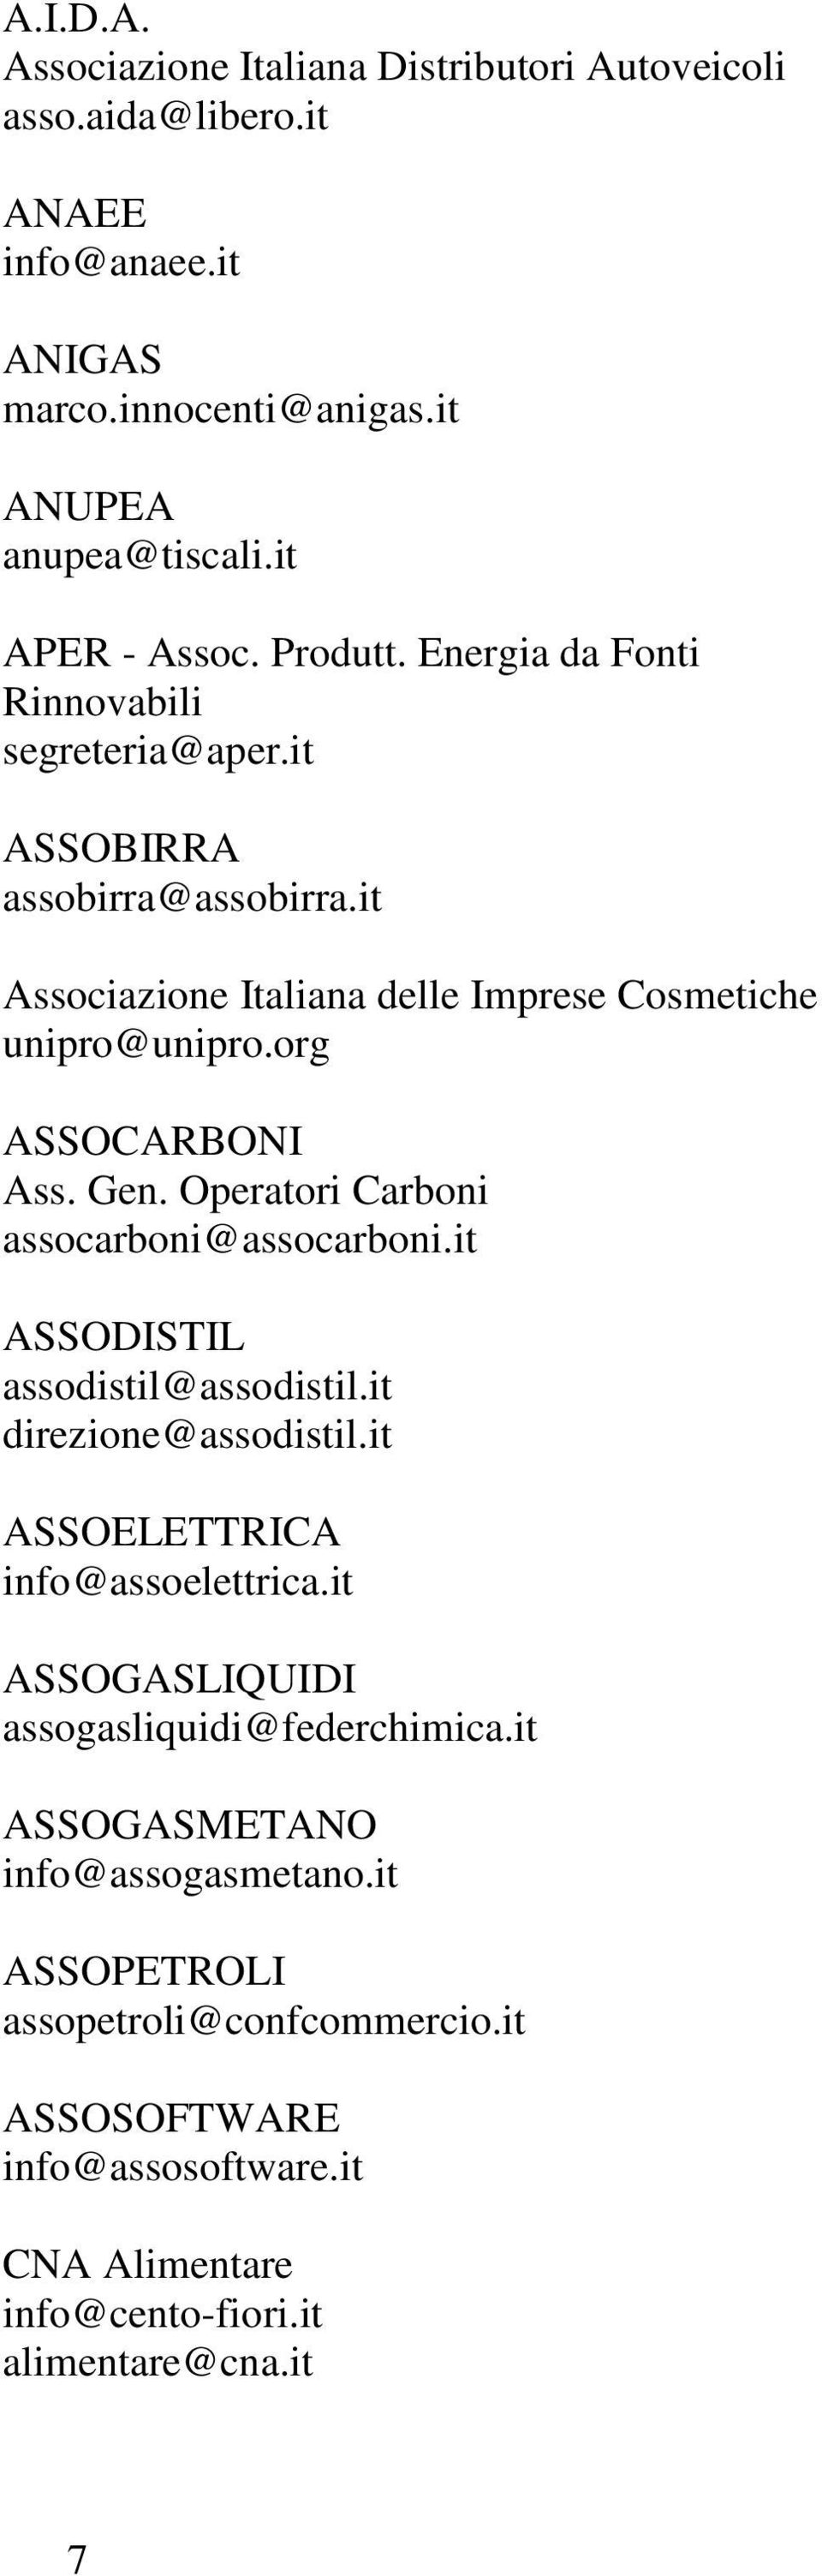 Gen. Operatori Carboni assocarboni@assocarboni.it ASSODISTIL assodistil@assodistil.it direzione@assodistil.it ASSOELETTRICA info@assoelettrica.